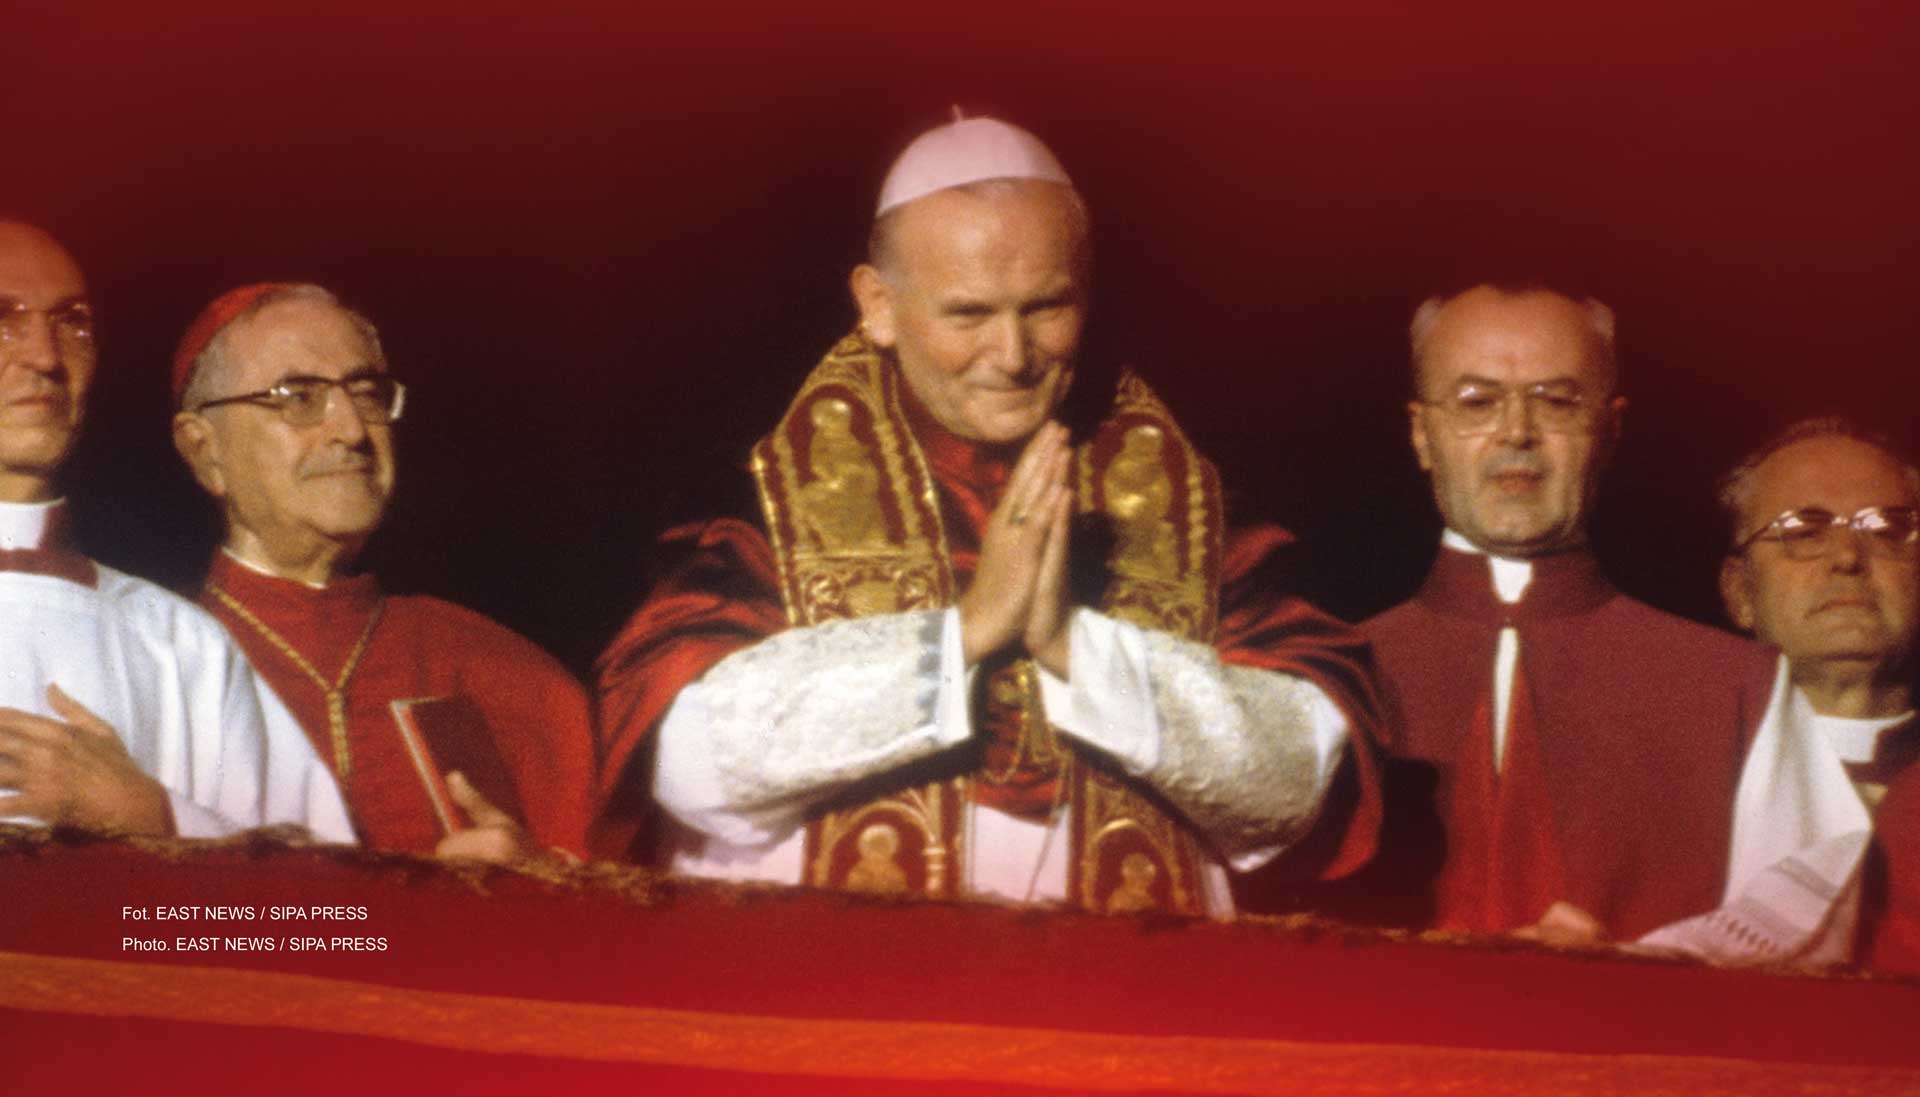 Pope John Paul II Polandshiok polish festival in Singapore | polandshiok.sg